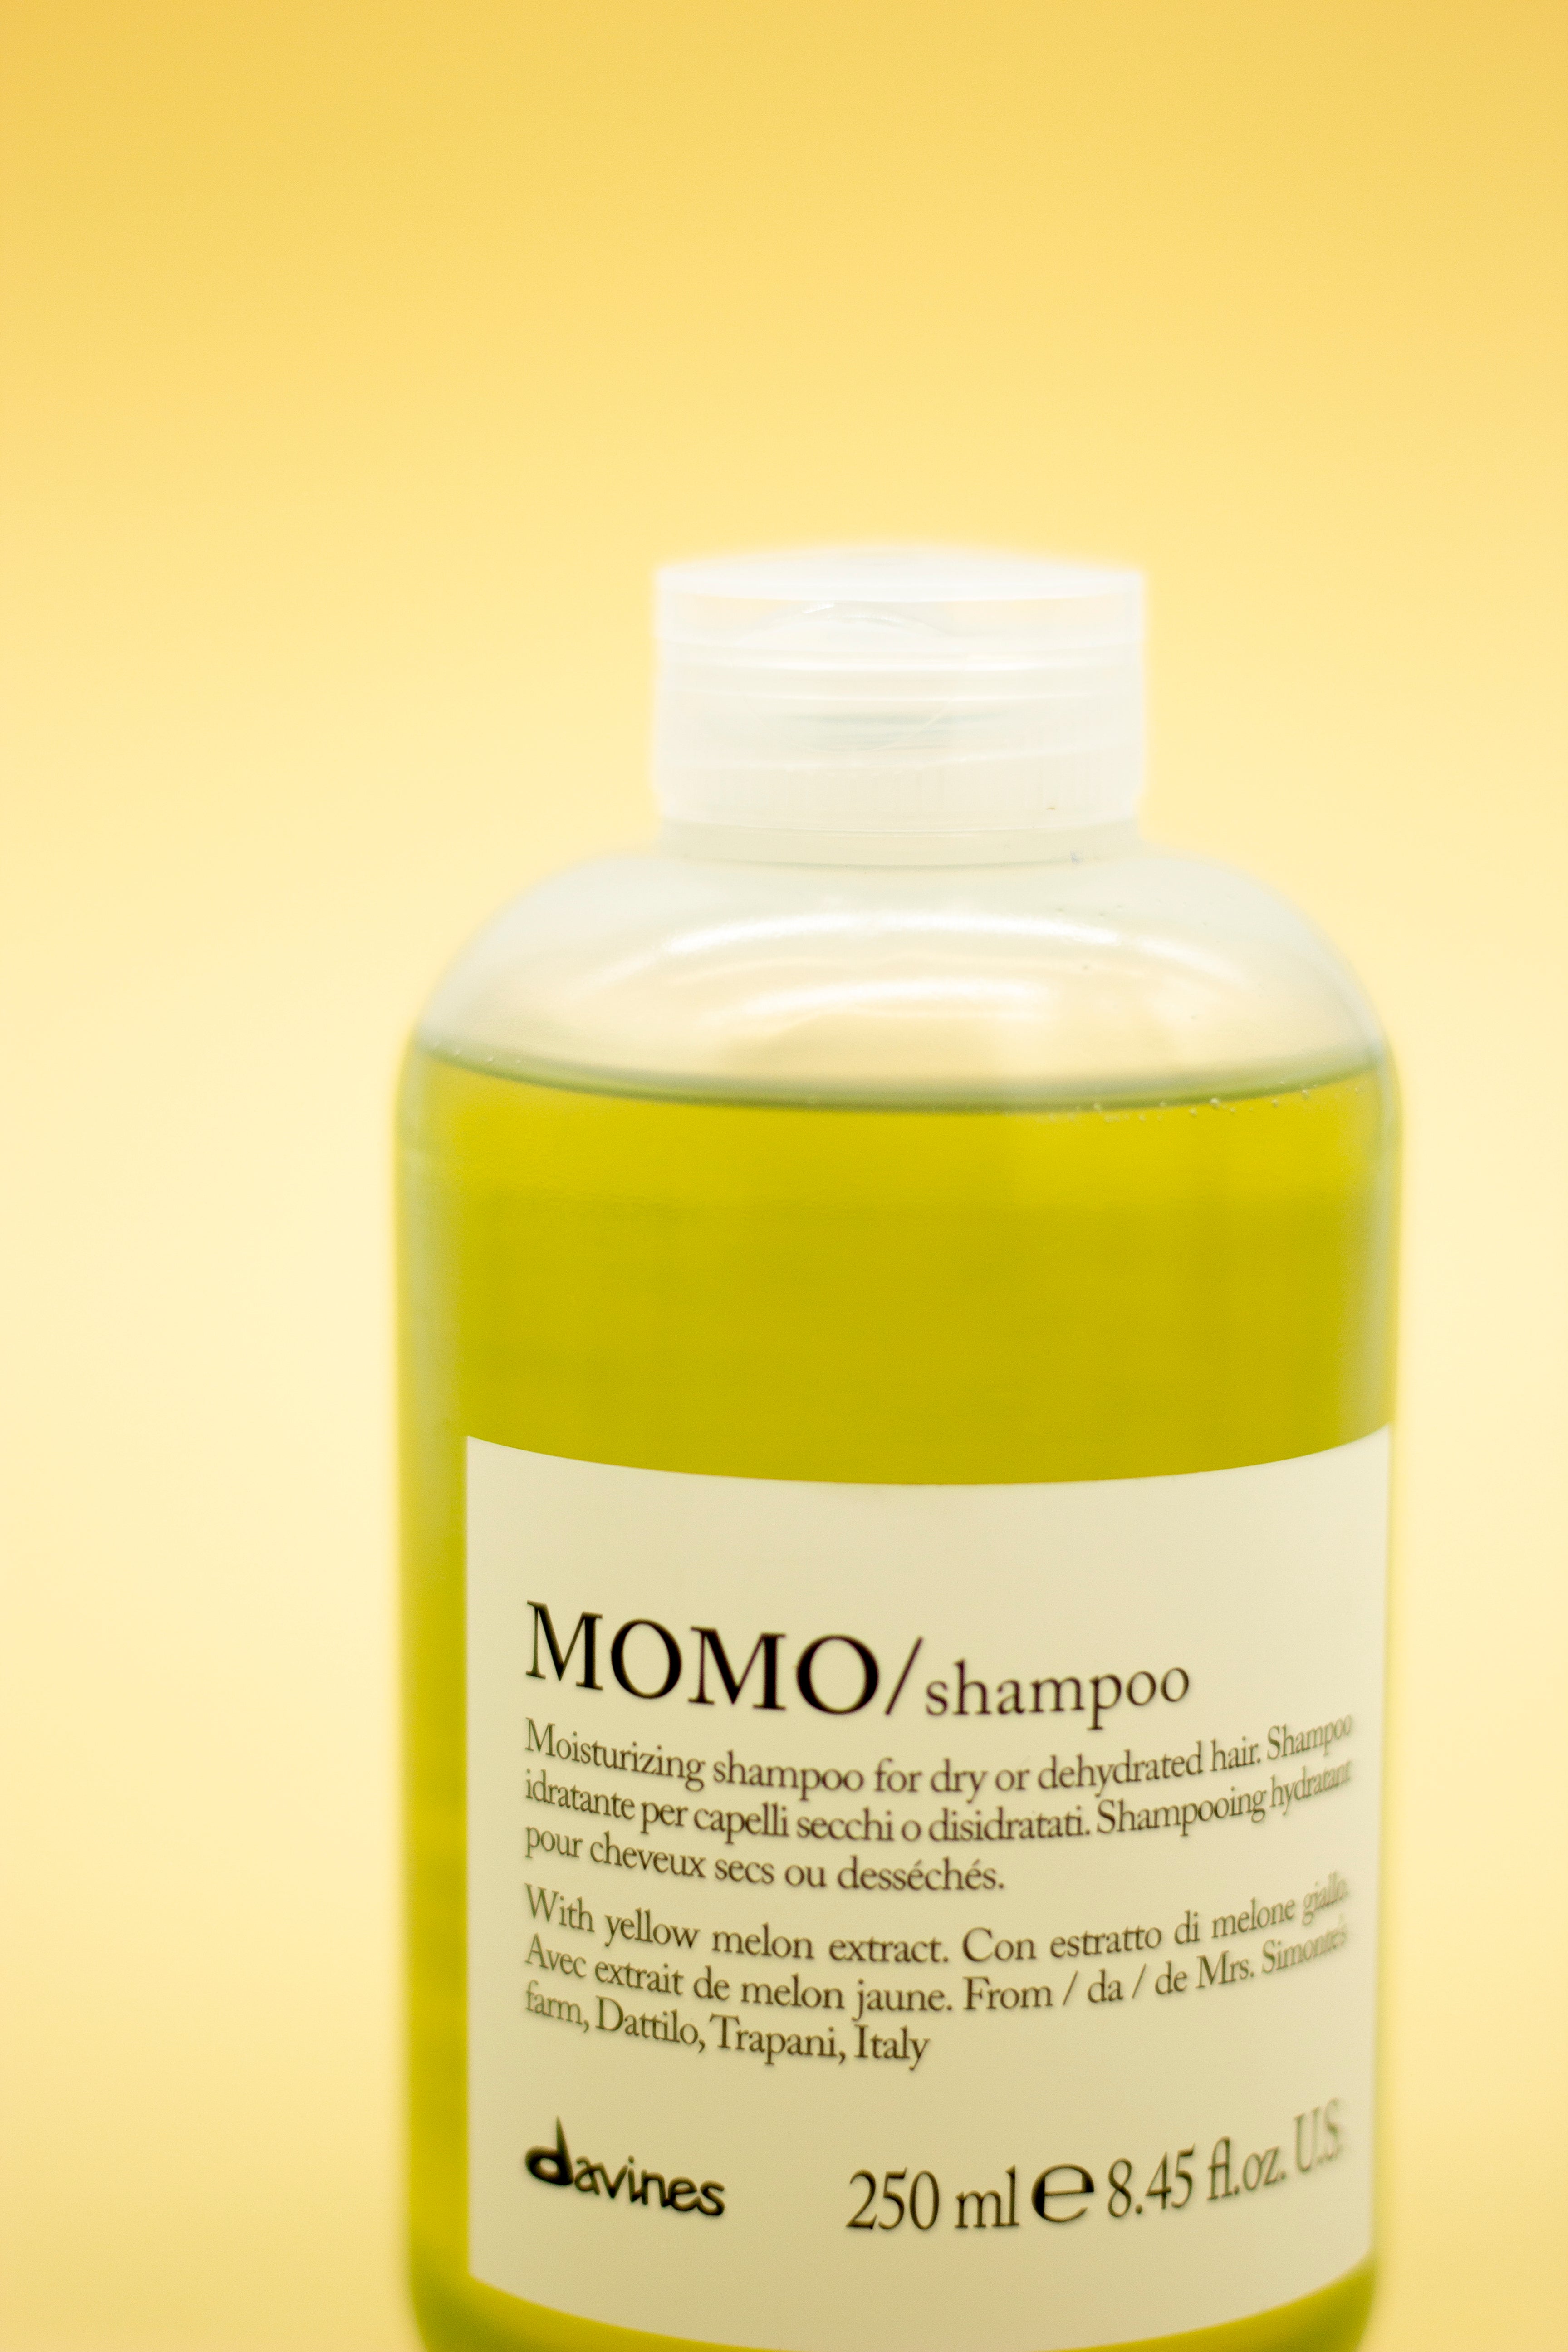 MOMO/ Shampoo